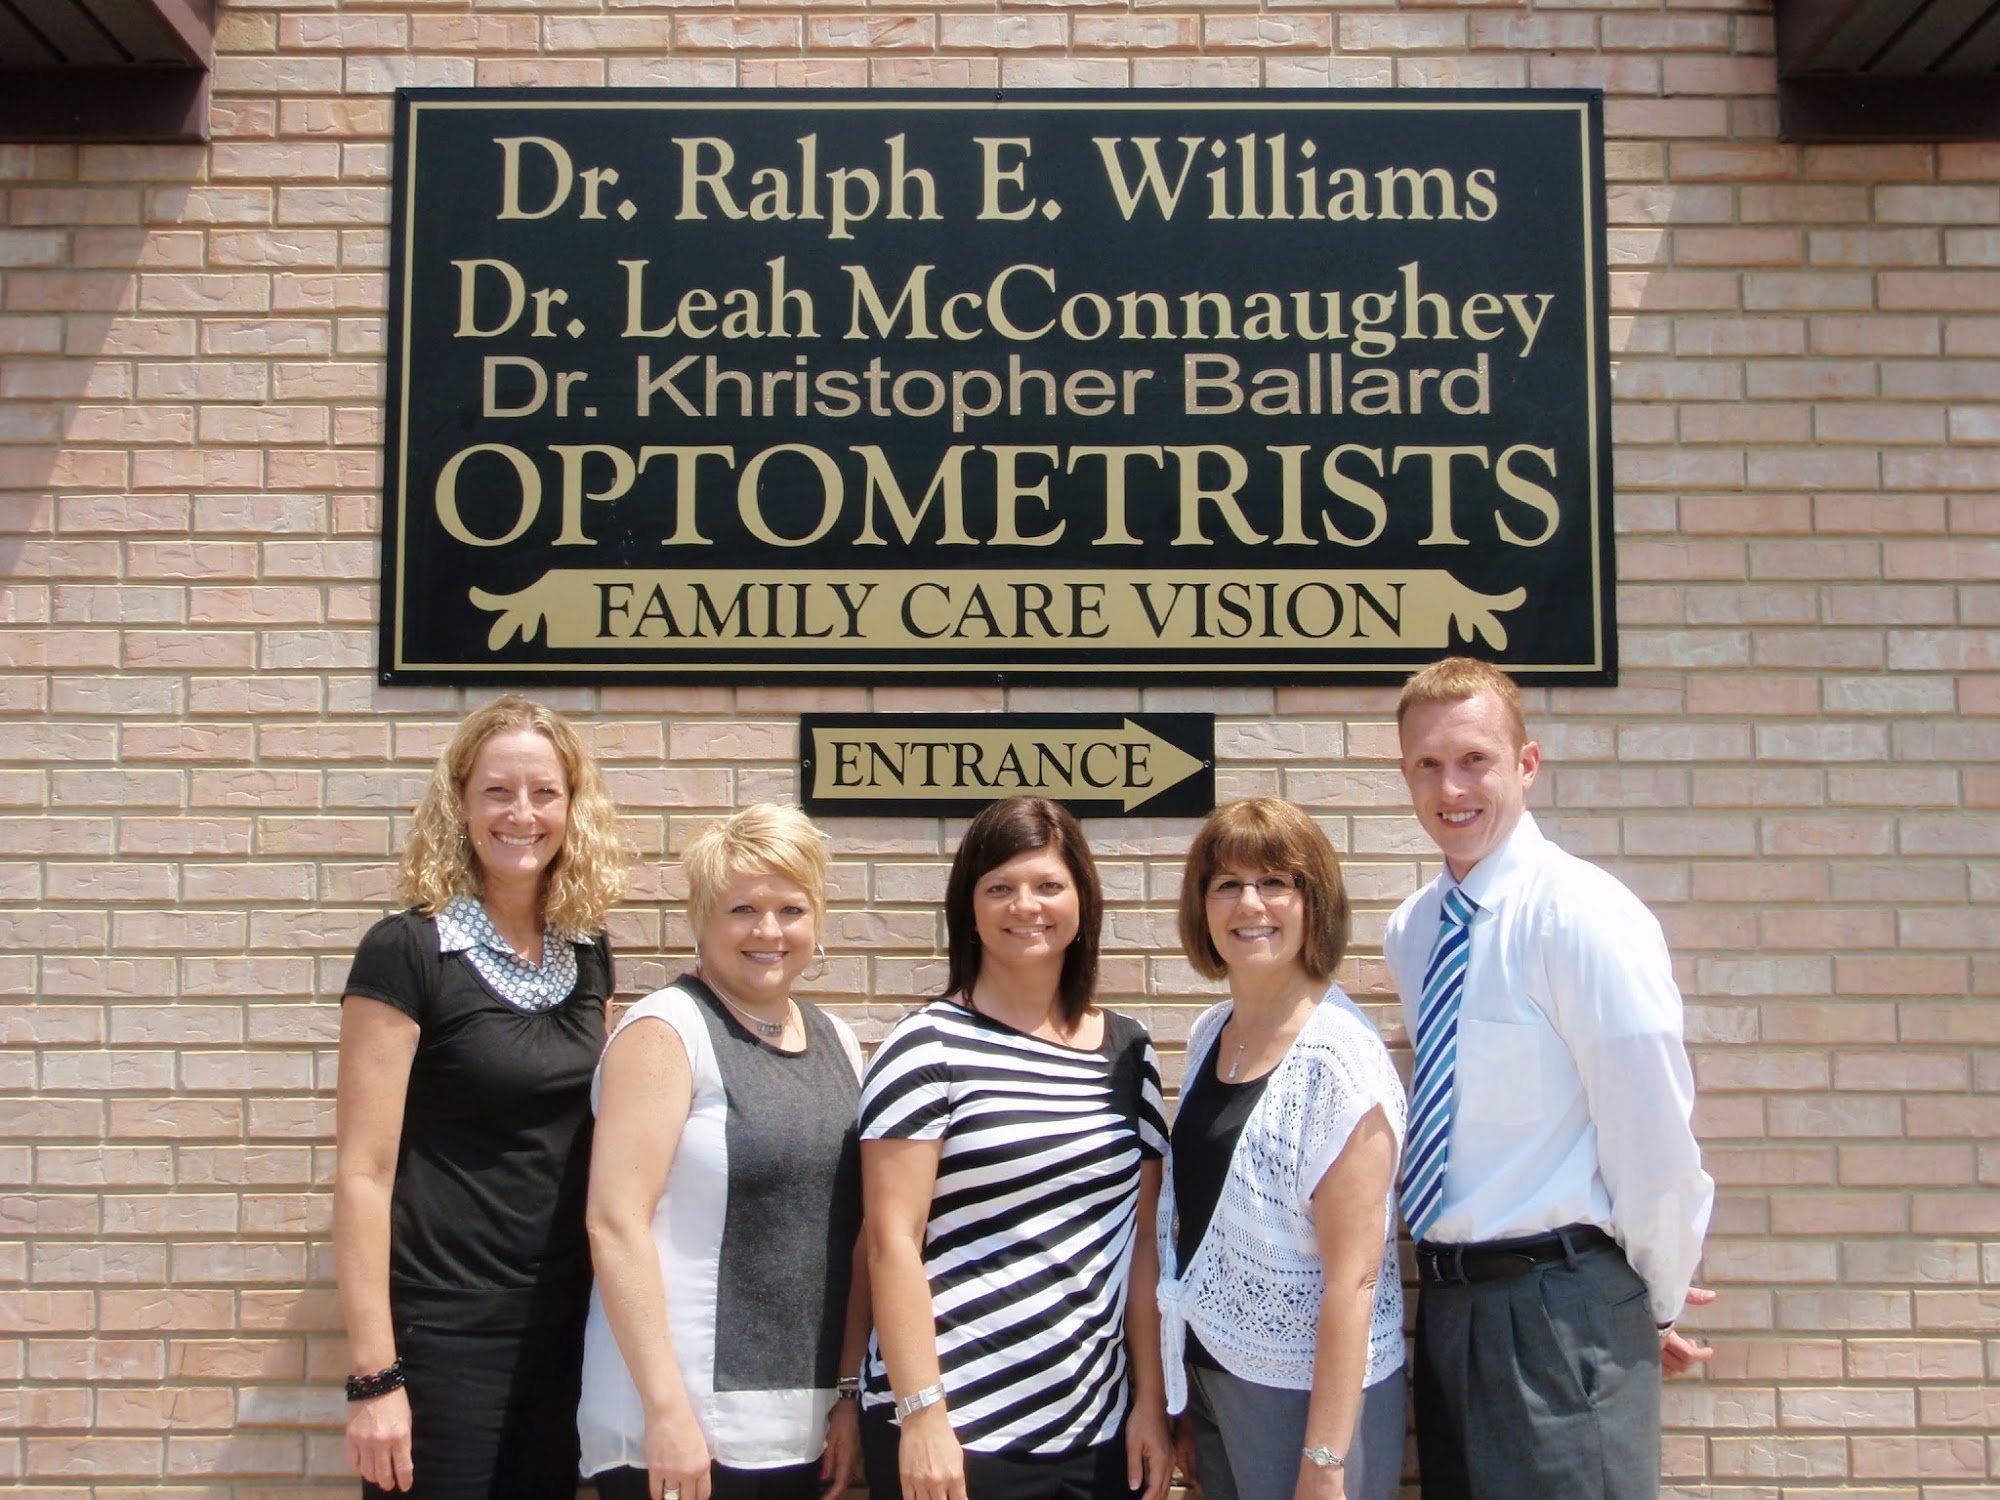 Hillsboro Family Vision, Dr. Leah McConnaughey, Dr. Khristopher Ballard, and Dr. Laura Andre. 925 W Main St, Hillsboro Ohio 45133